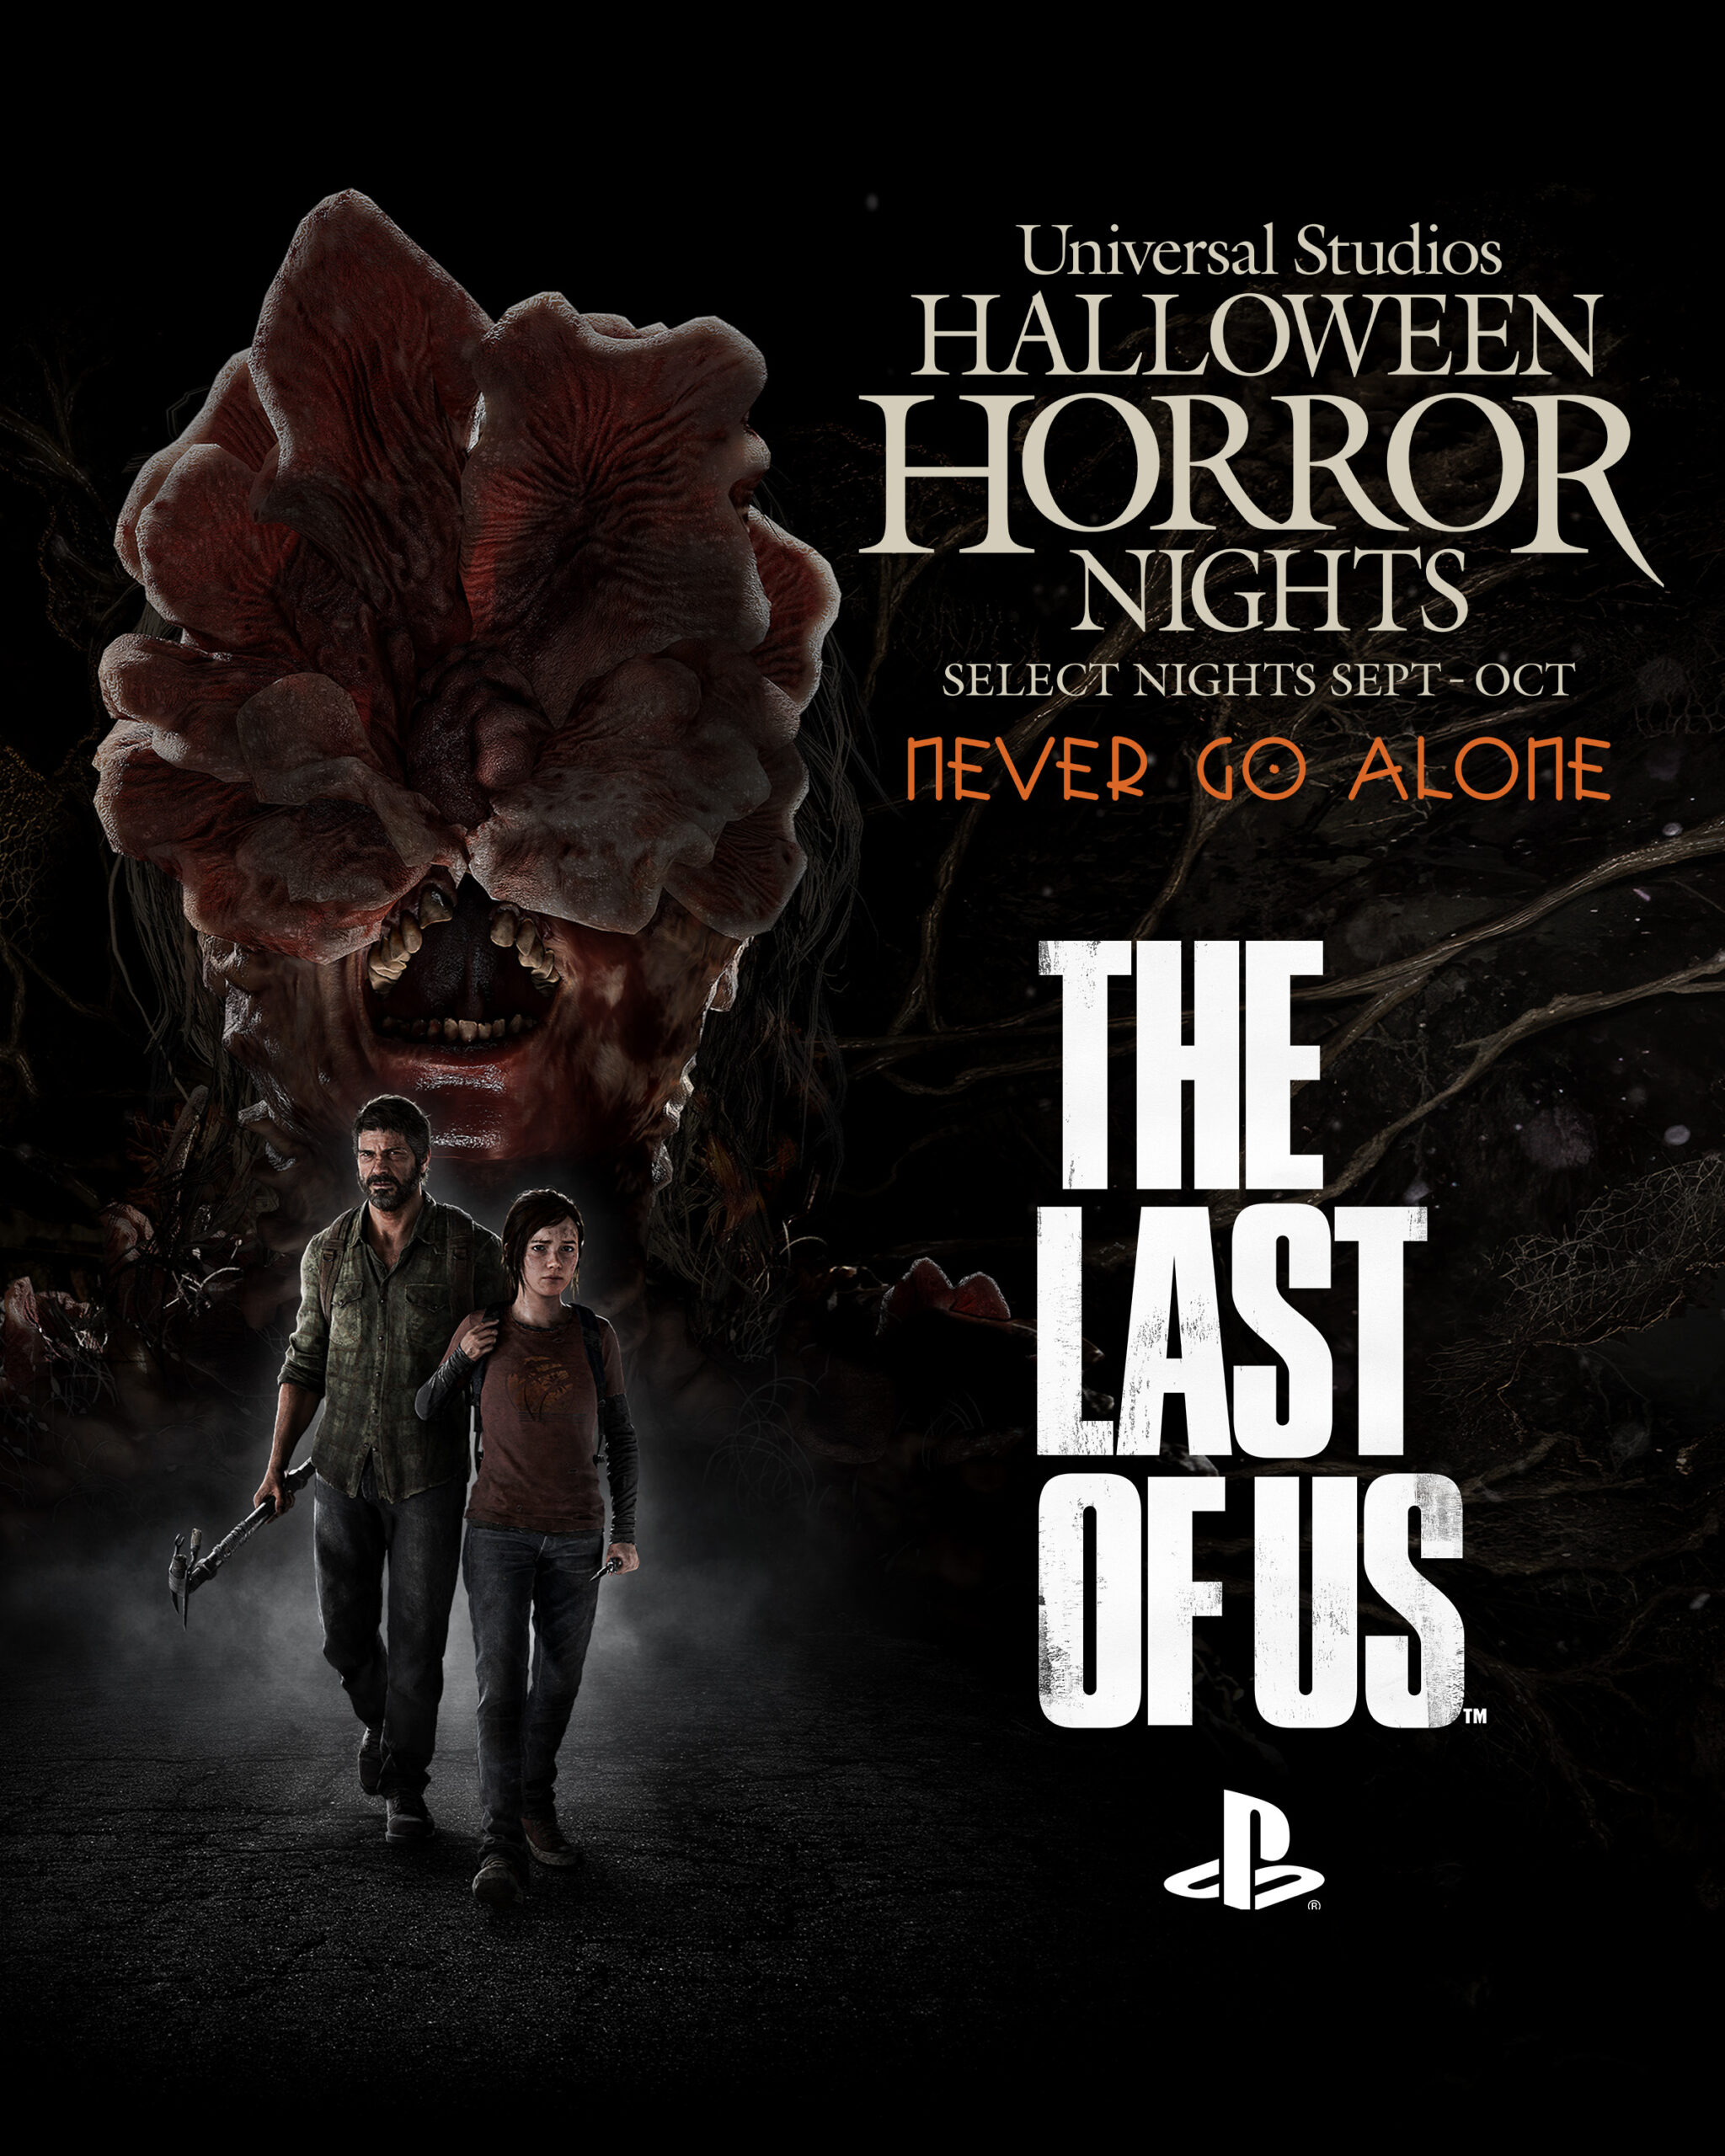 Universal Studios’ Halloween Horror Nights dares guests to survive “The